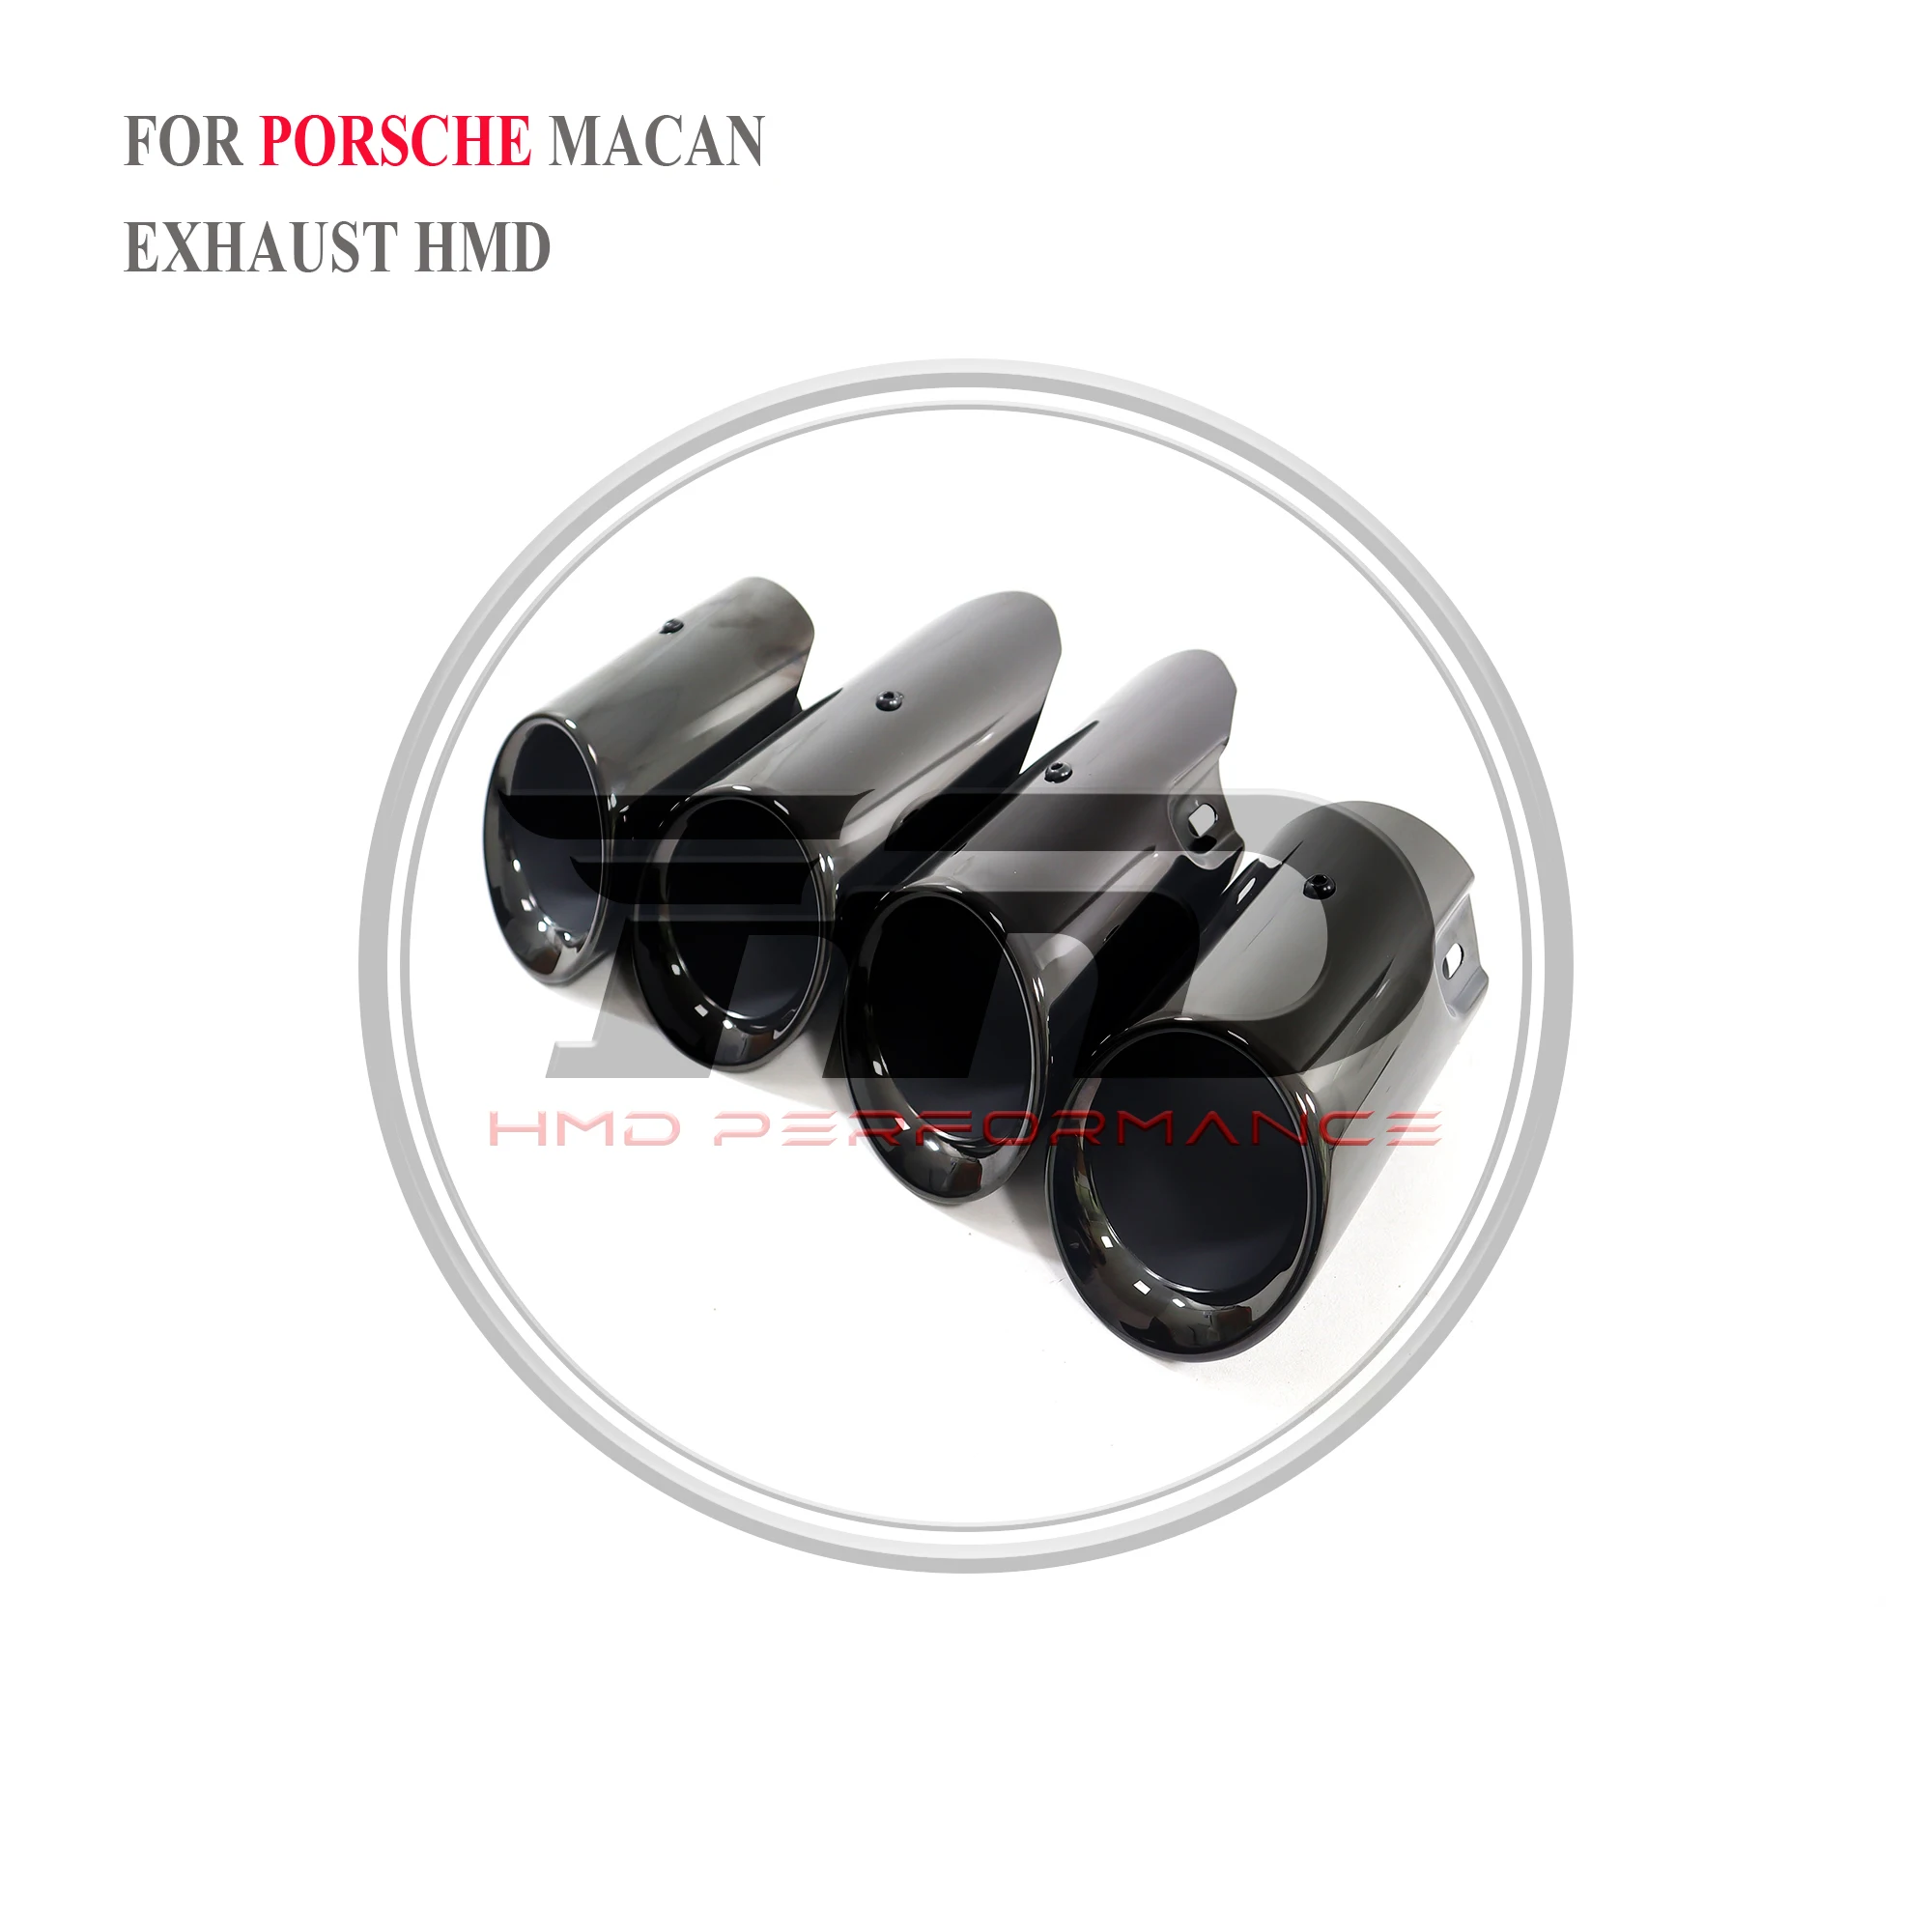 

HMD Stainless Steel Tips For Porsche Macan Tips Upgrading Four Tips Porcelain Stainless Steel Bright Black